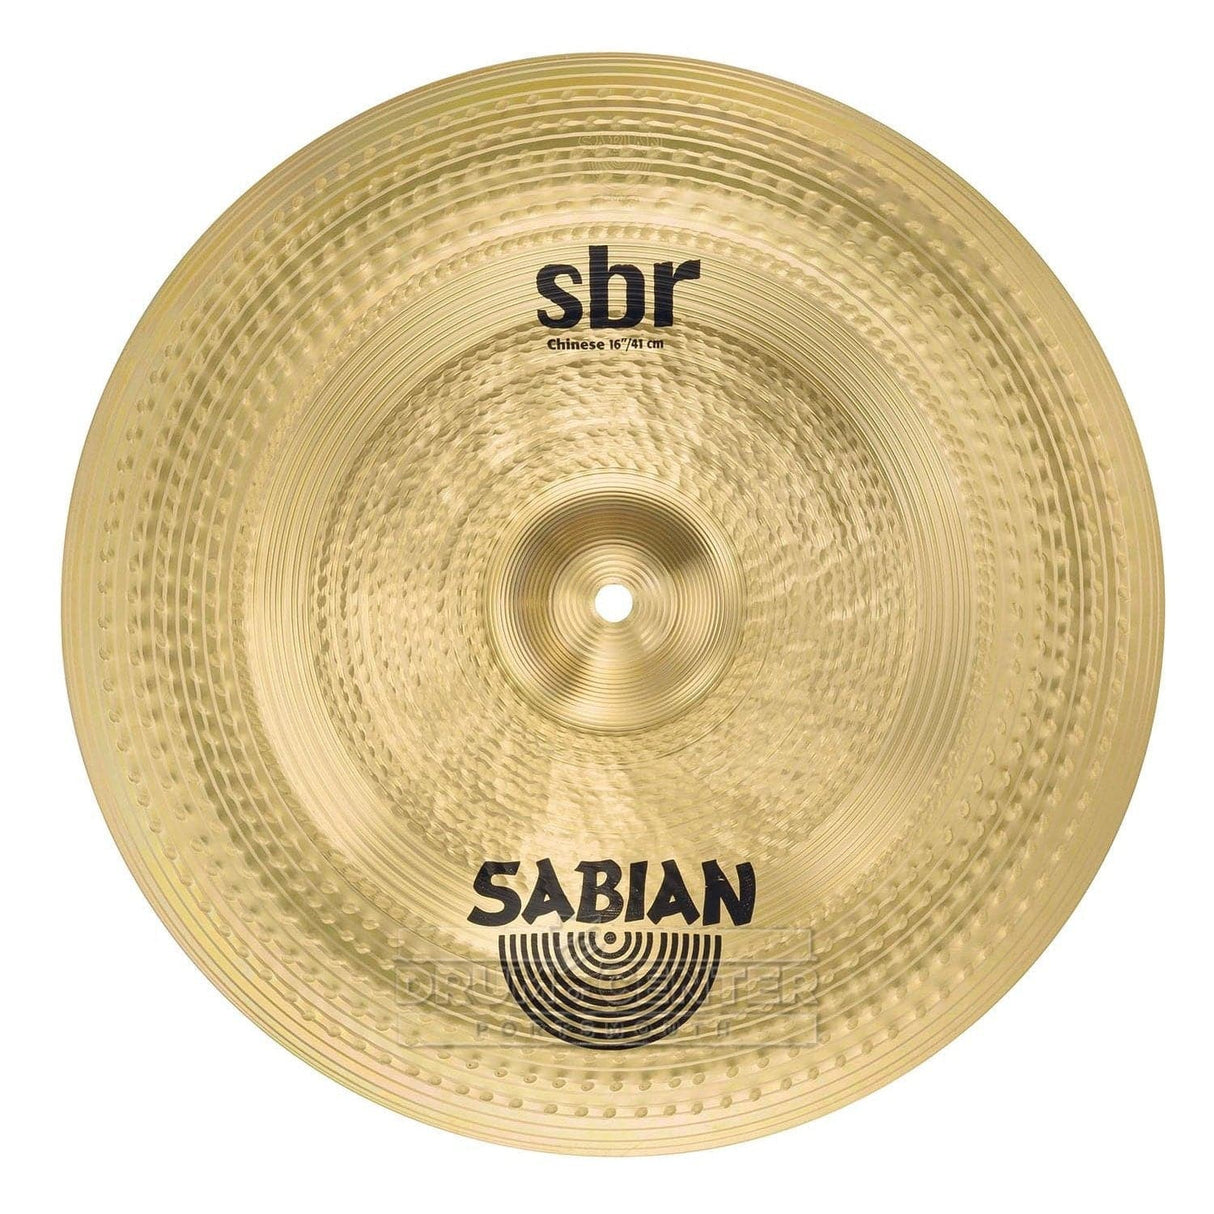 Sabian SBr Chinese Cymbal 16"